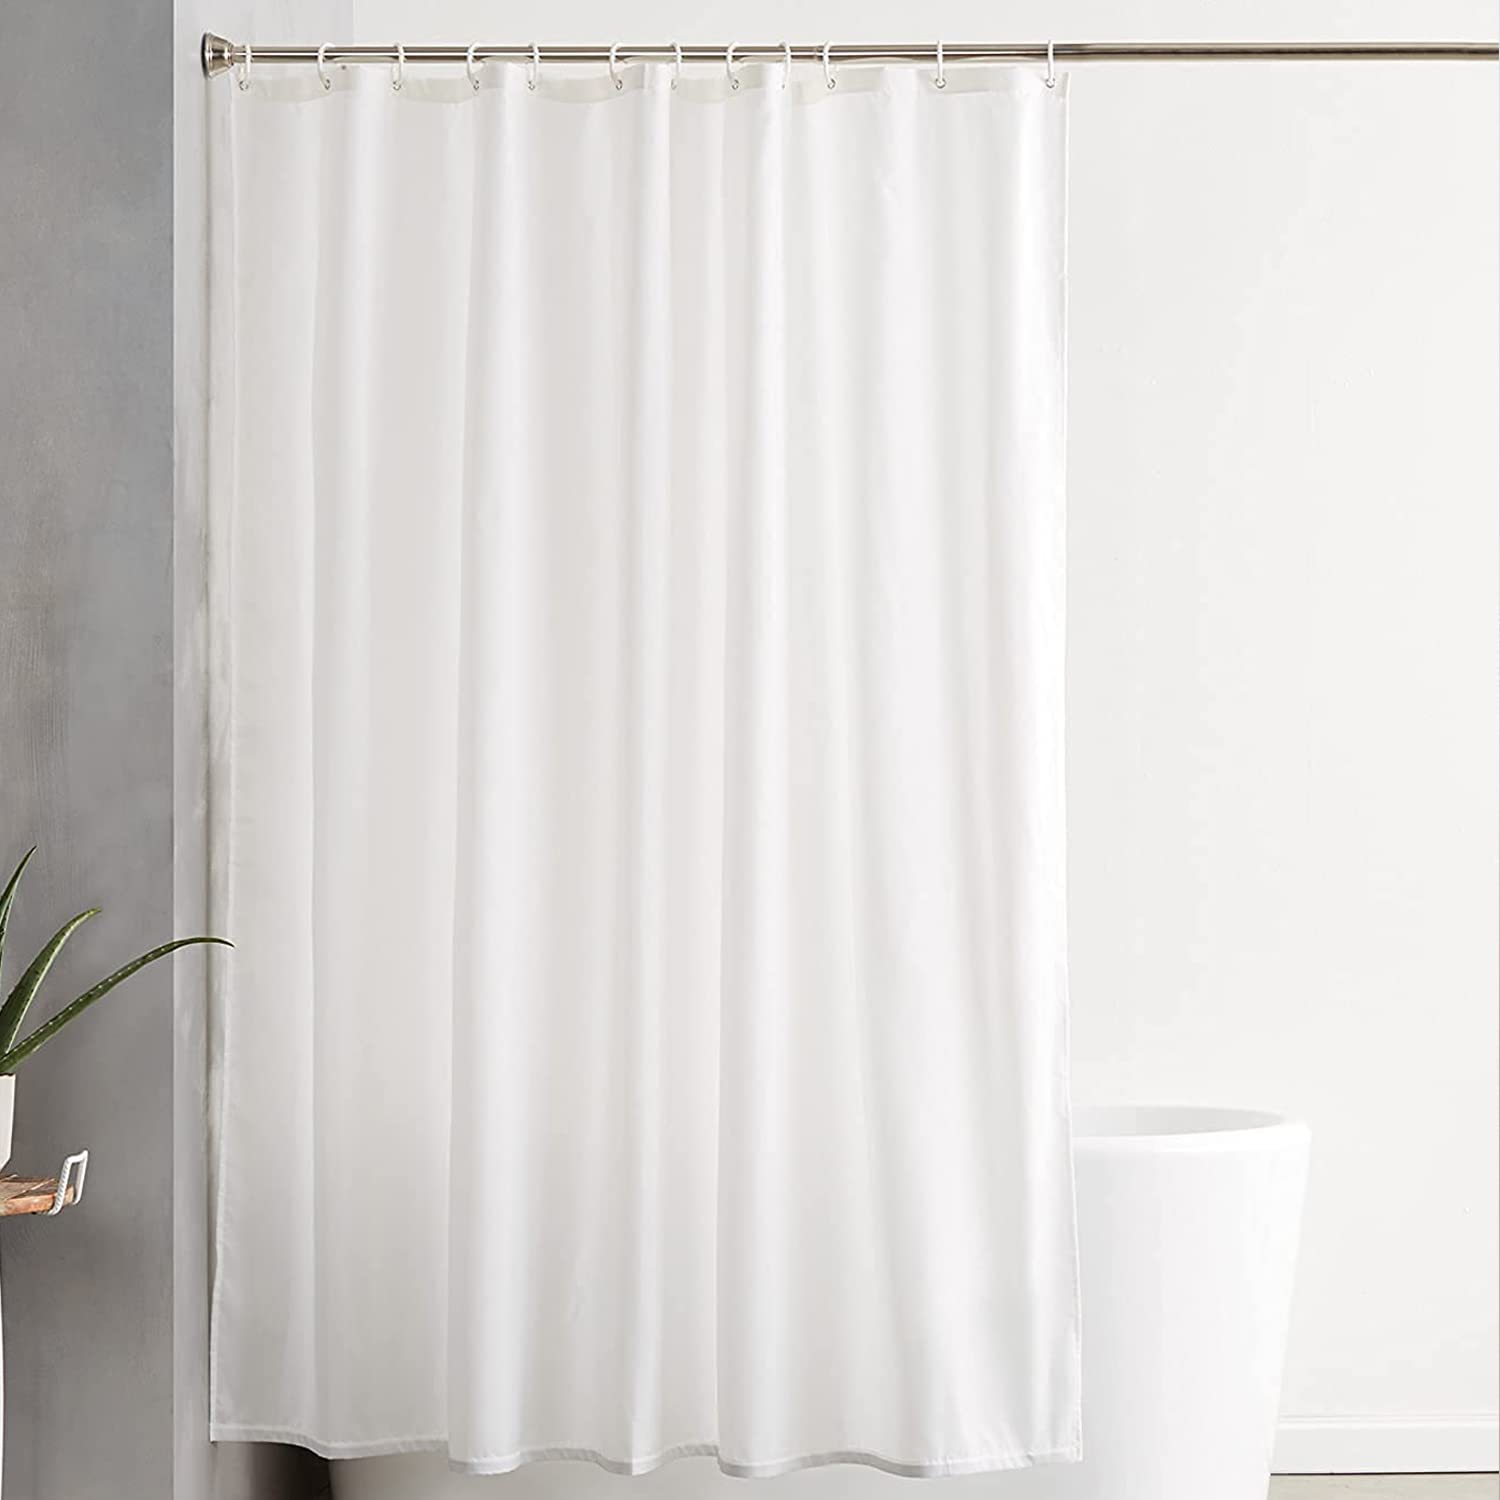 12 Shower hooks 72*72 in Bamboo 3D Printing Decor Bathroom Shower Curtain 